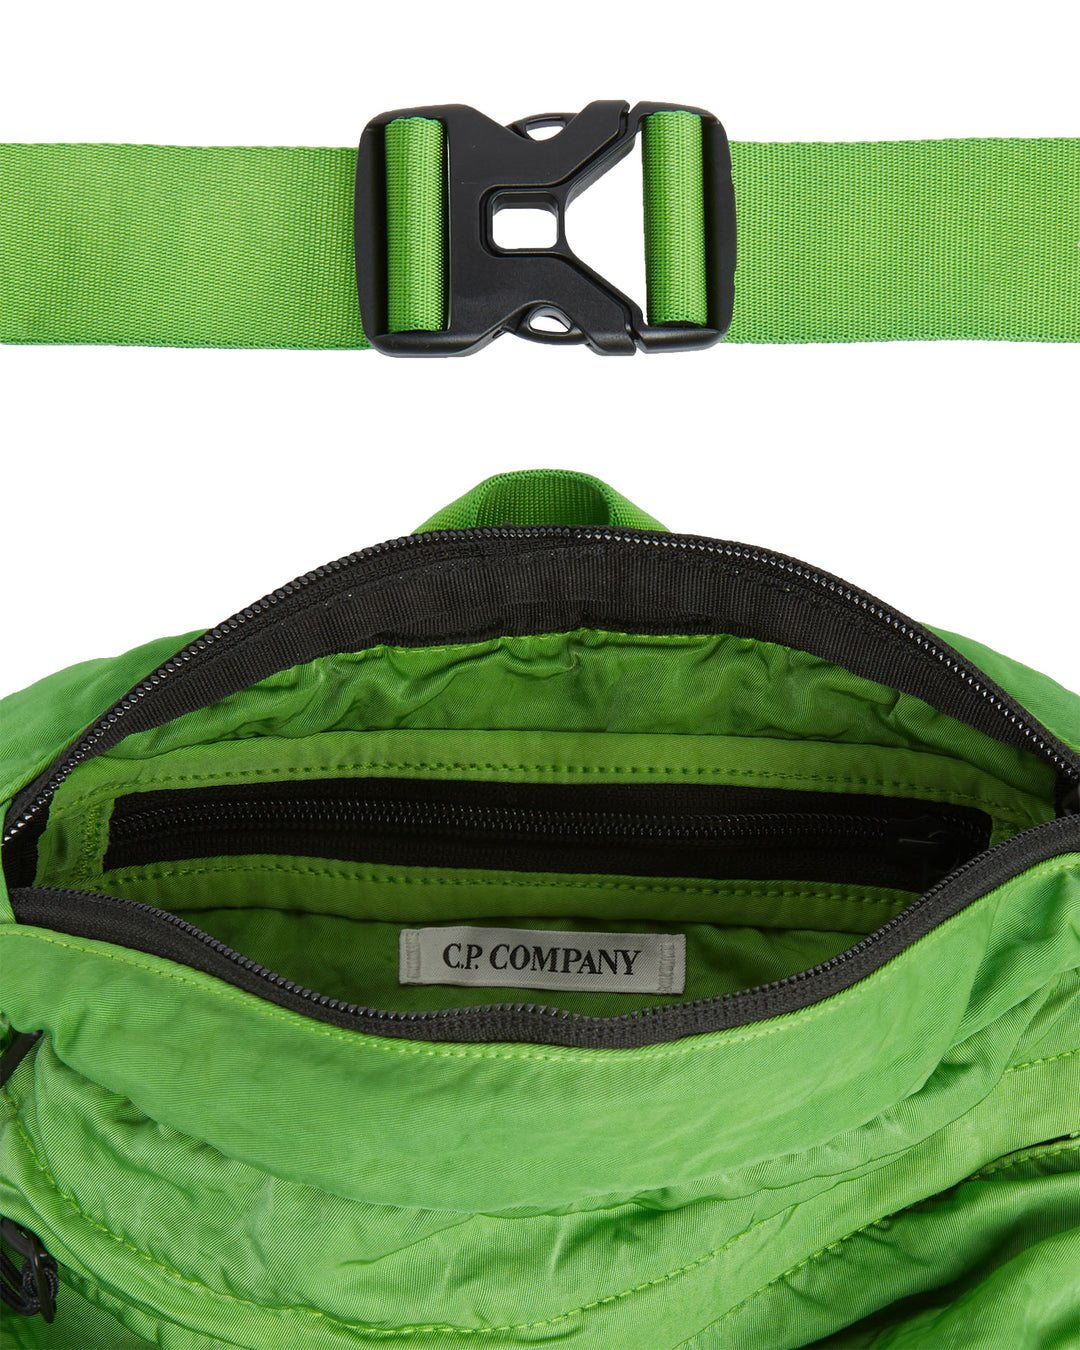 CP Company Lens Belt Bag Green